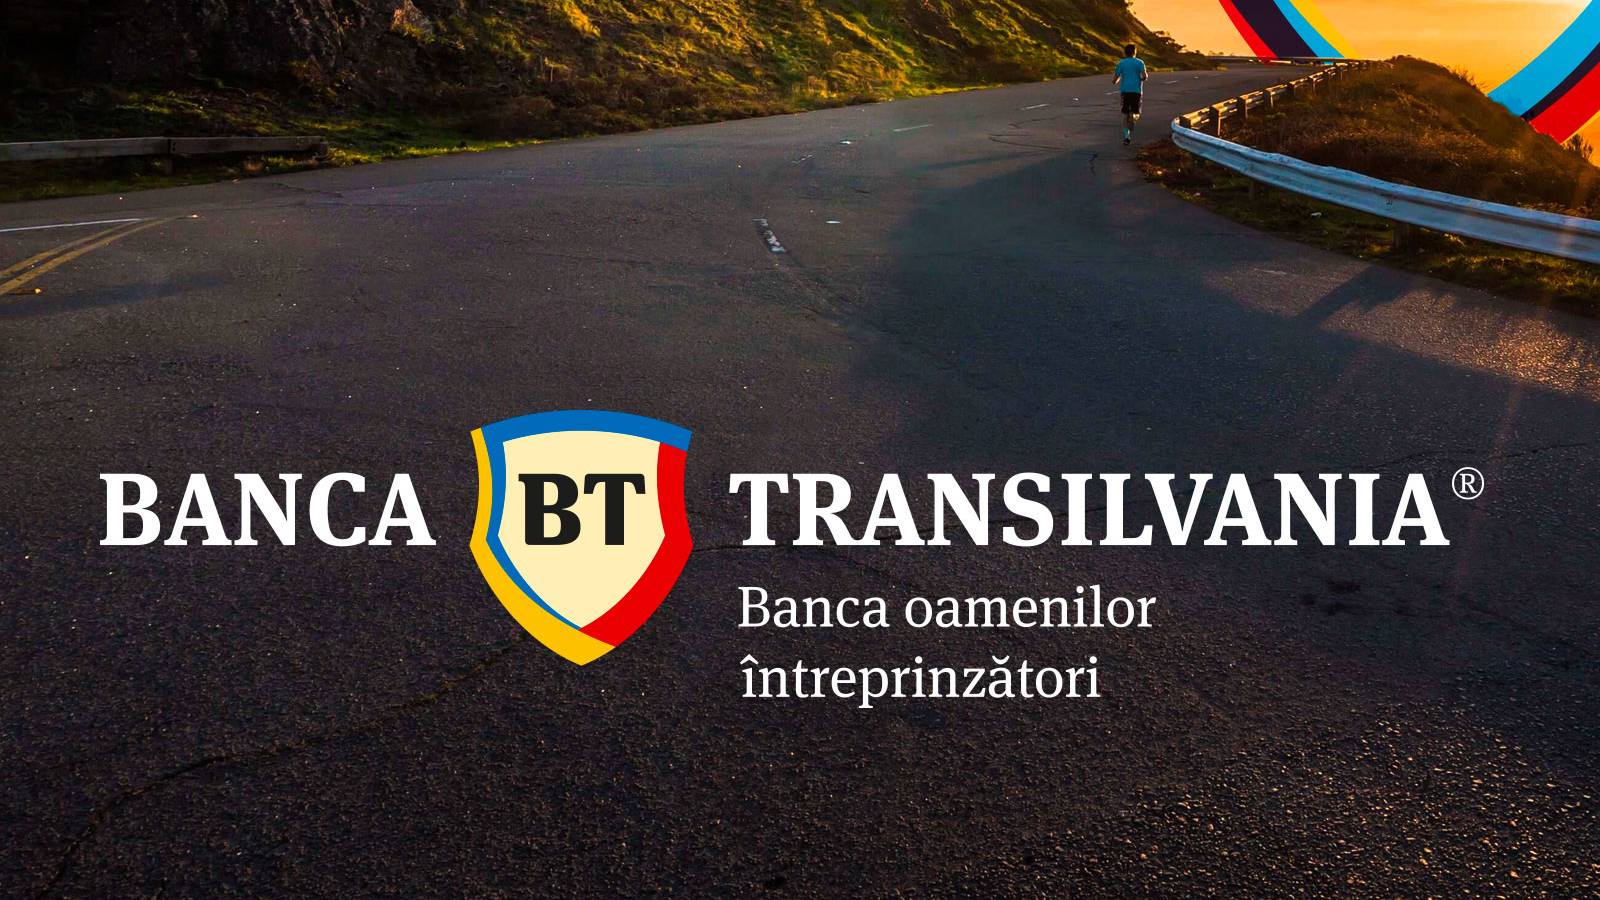 BANCA Transilvania åbning